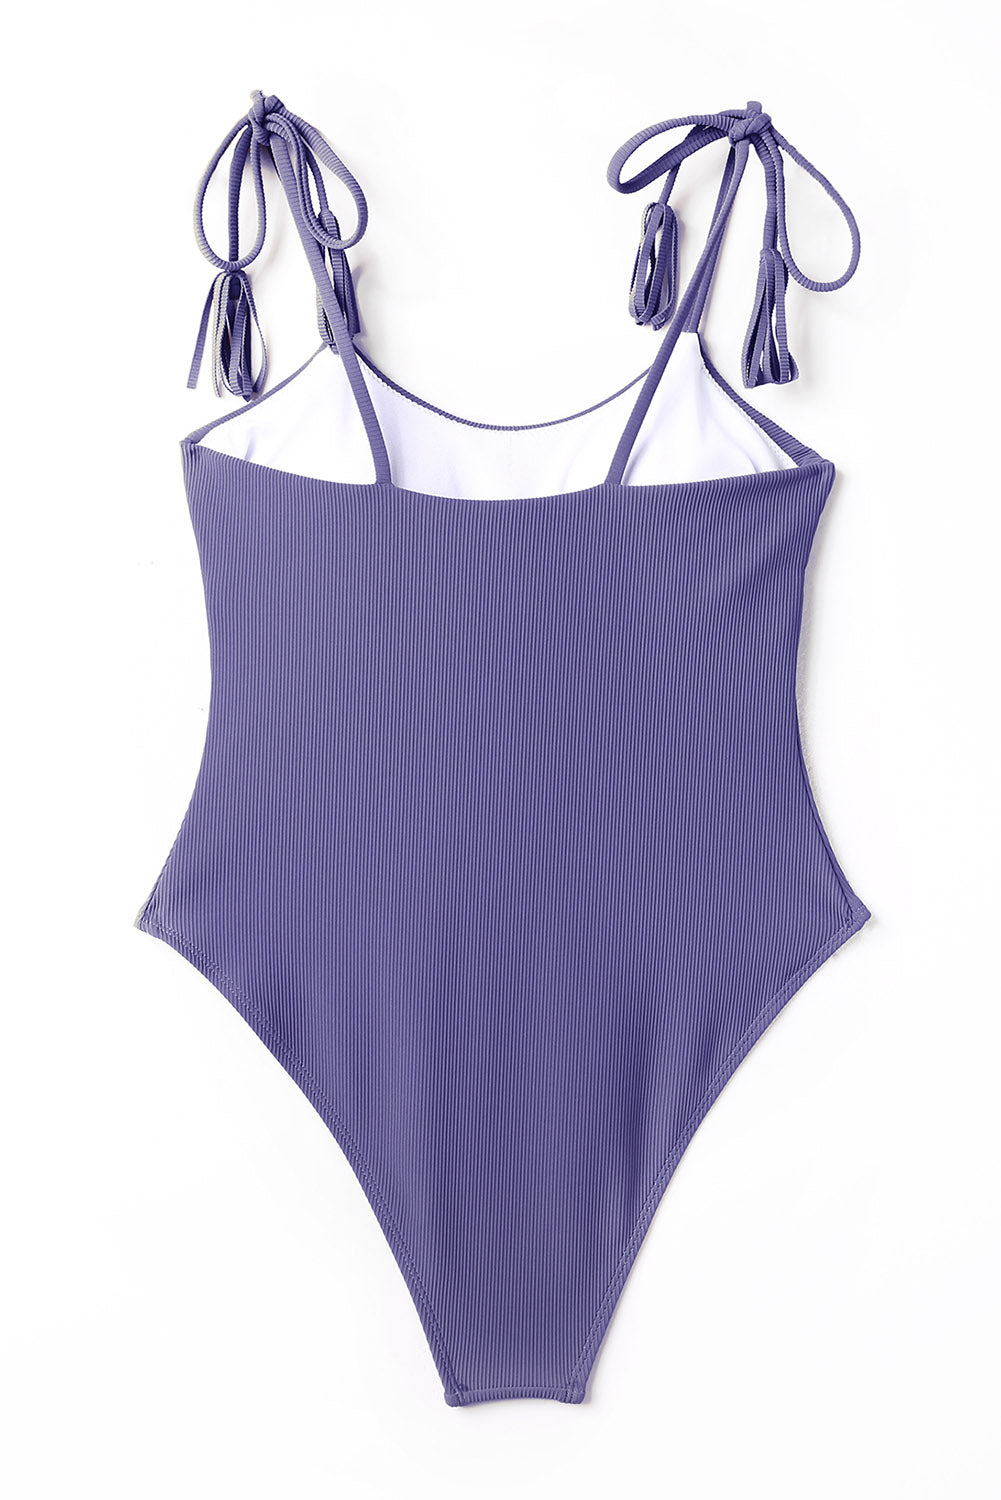 LC443450-5-S, LC443450-5-M, LC443450-5-L, LC443450-5-XL, LC443450-5-2XL, Blue Women One Piece Swimsuit Tassel Tie Straps Ribbed Bathing Suit